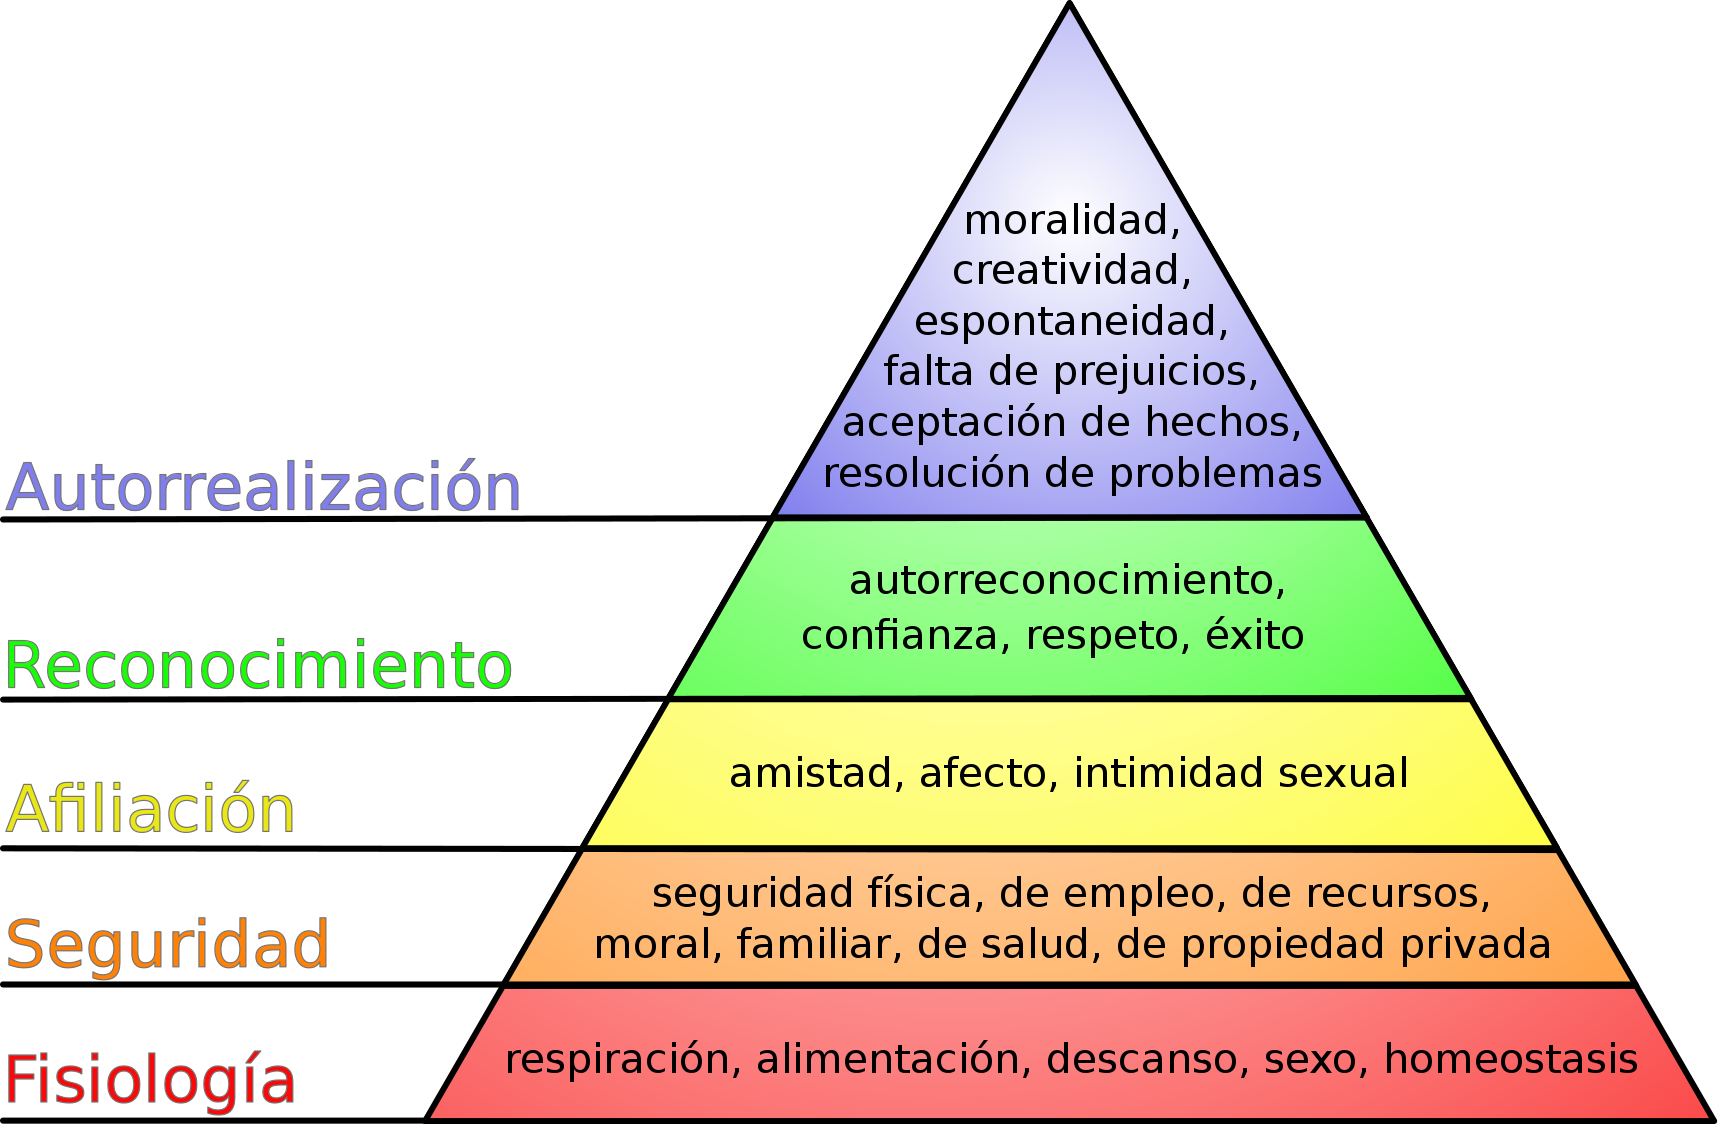 La pirámide de Maslow o de jerarquía de las necesidades humanas.&nbsp;<a href="https://commons.wikimedia.org/wiki/File:Pir%C3%A1mide_de_Maslow.svg">Wikimedia Commons / J. Finkelstein</a>,&nbsp;<a href="http://creativecommons.org/licenses/by/4.0/">CC BY</a>